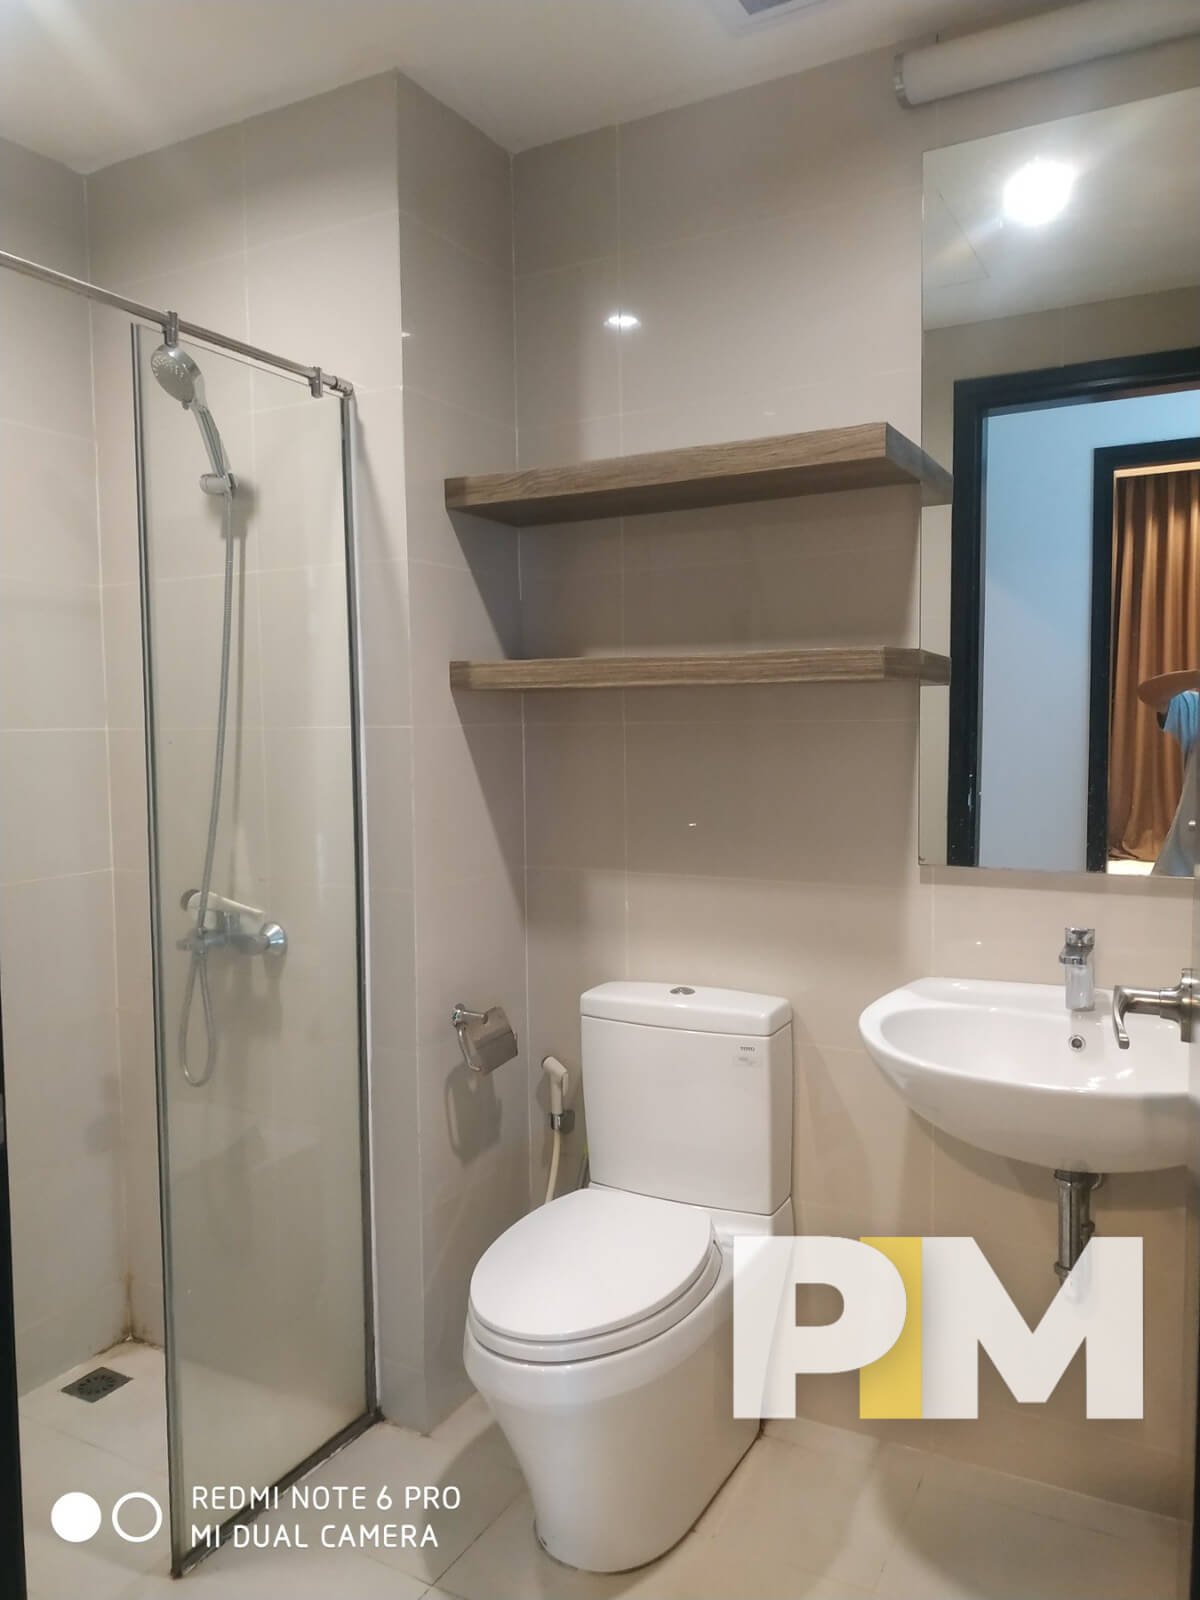 Tiolet room with sink - Myanmar Real Estate